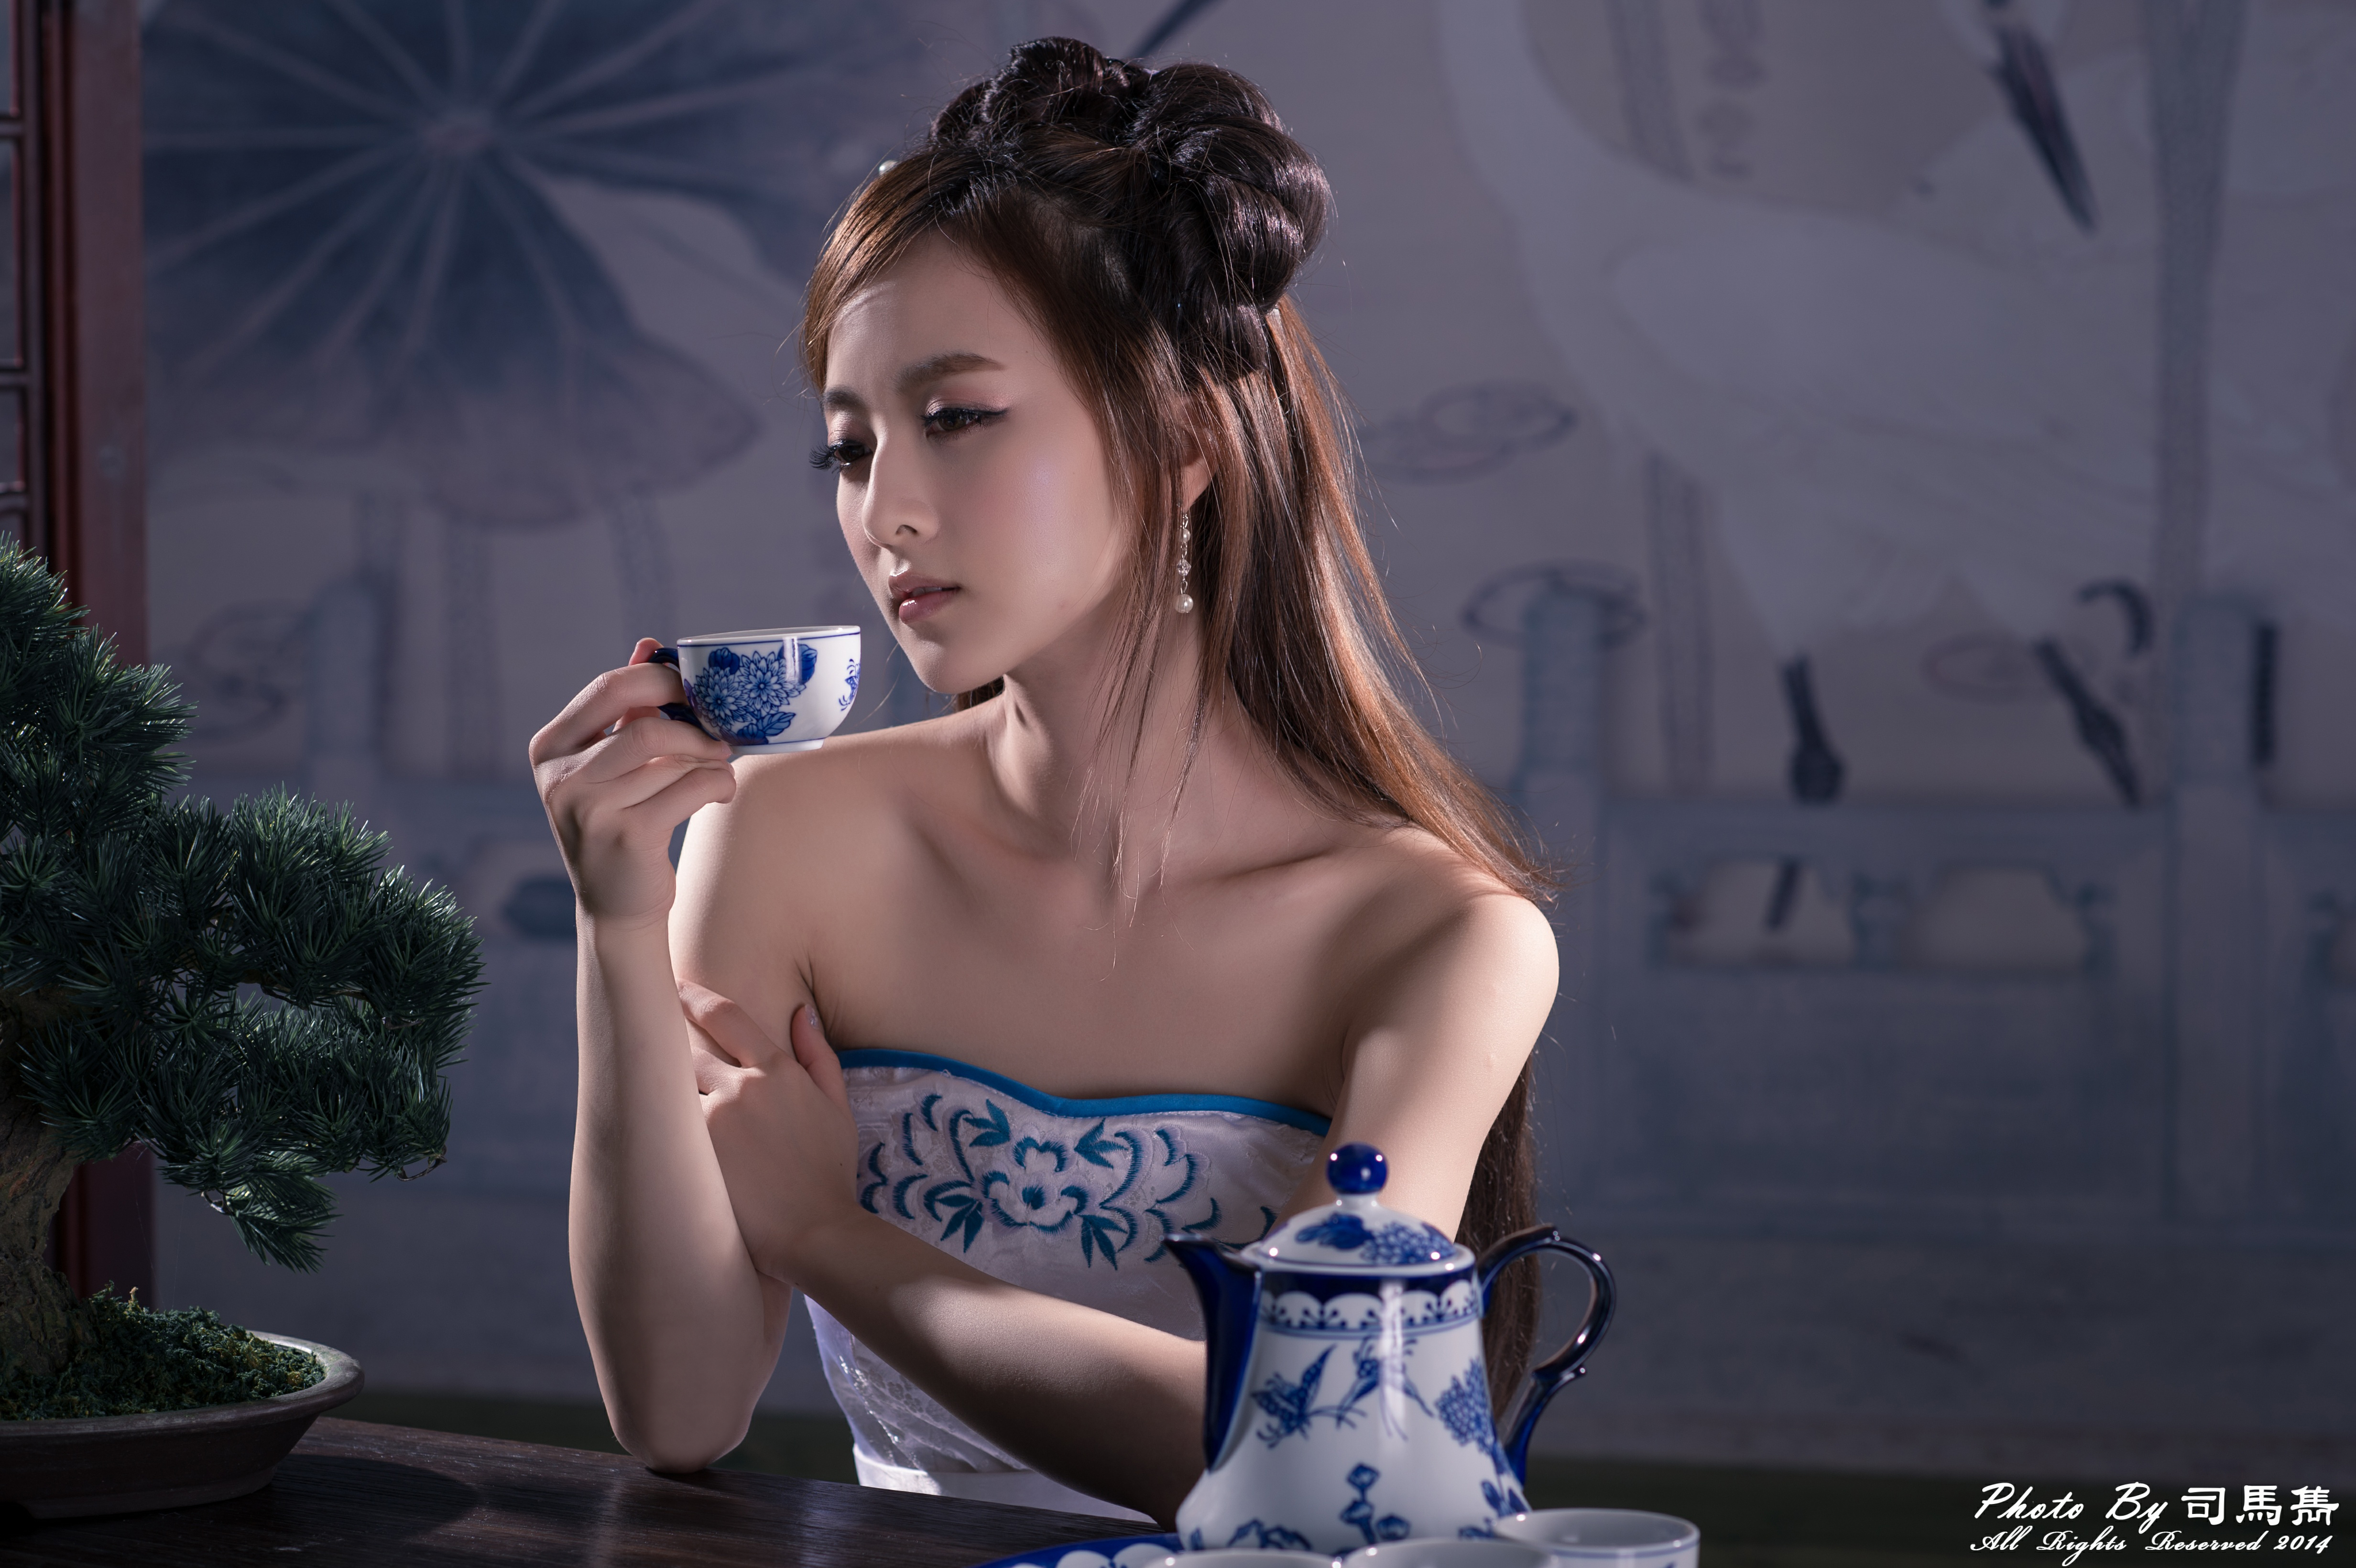 women, mikako zhang kaijie, asian, china, chinese, cup, dress, hair dress, taiwanese, tea set for android